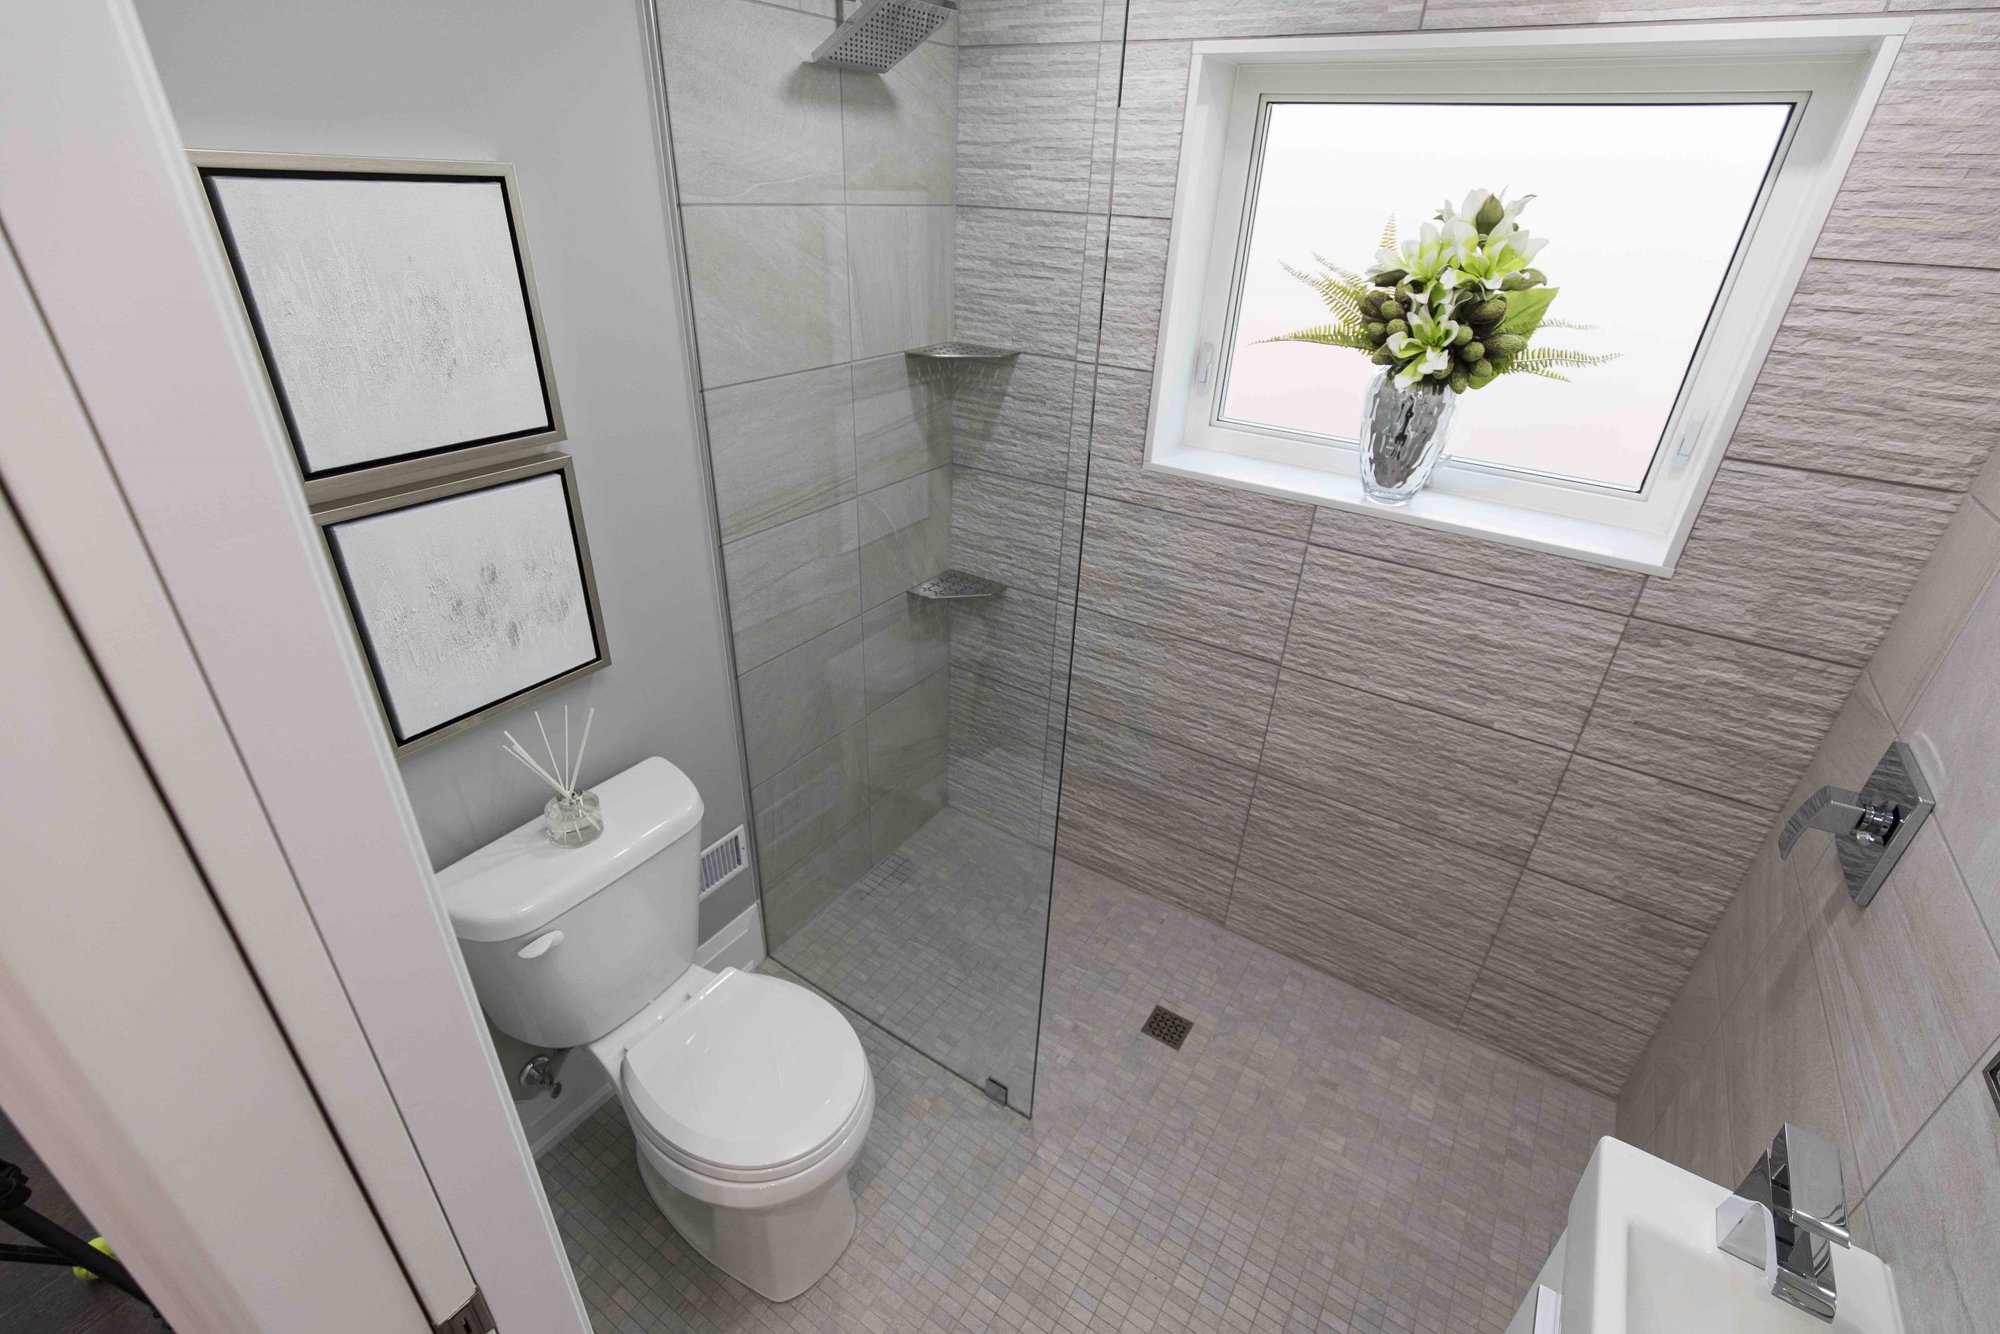 Bathroom renovation - bathroom waterproof seal between the tile and the window